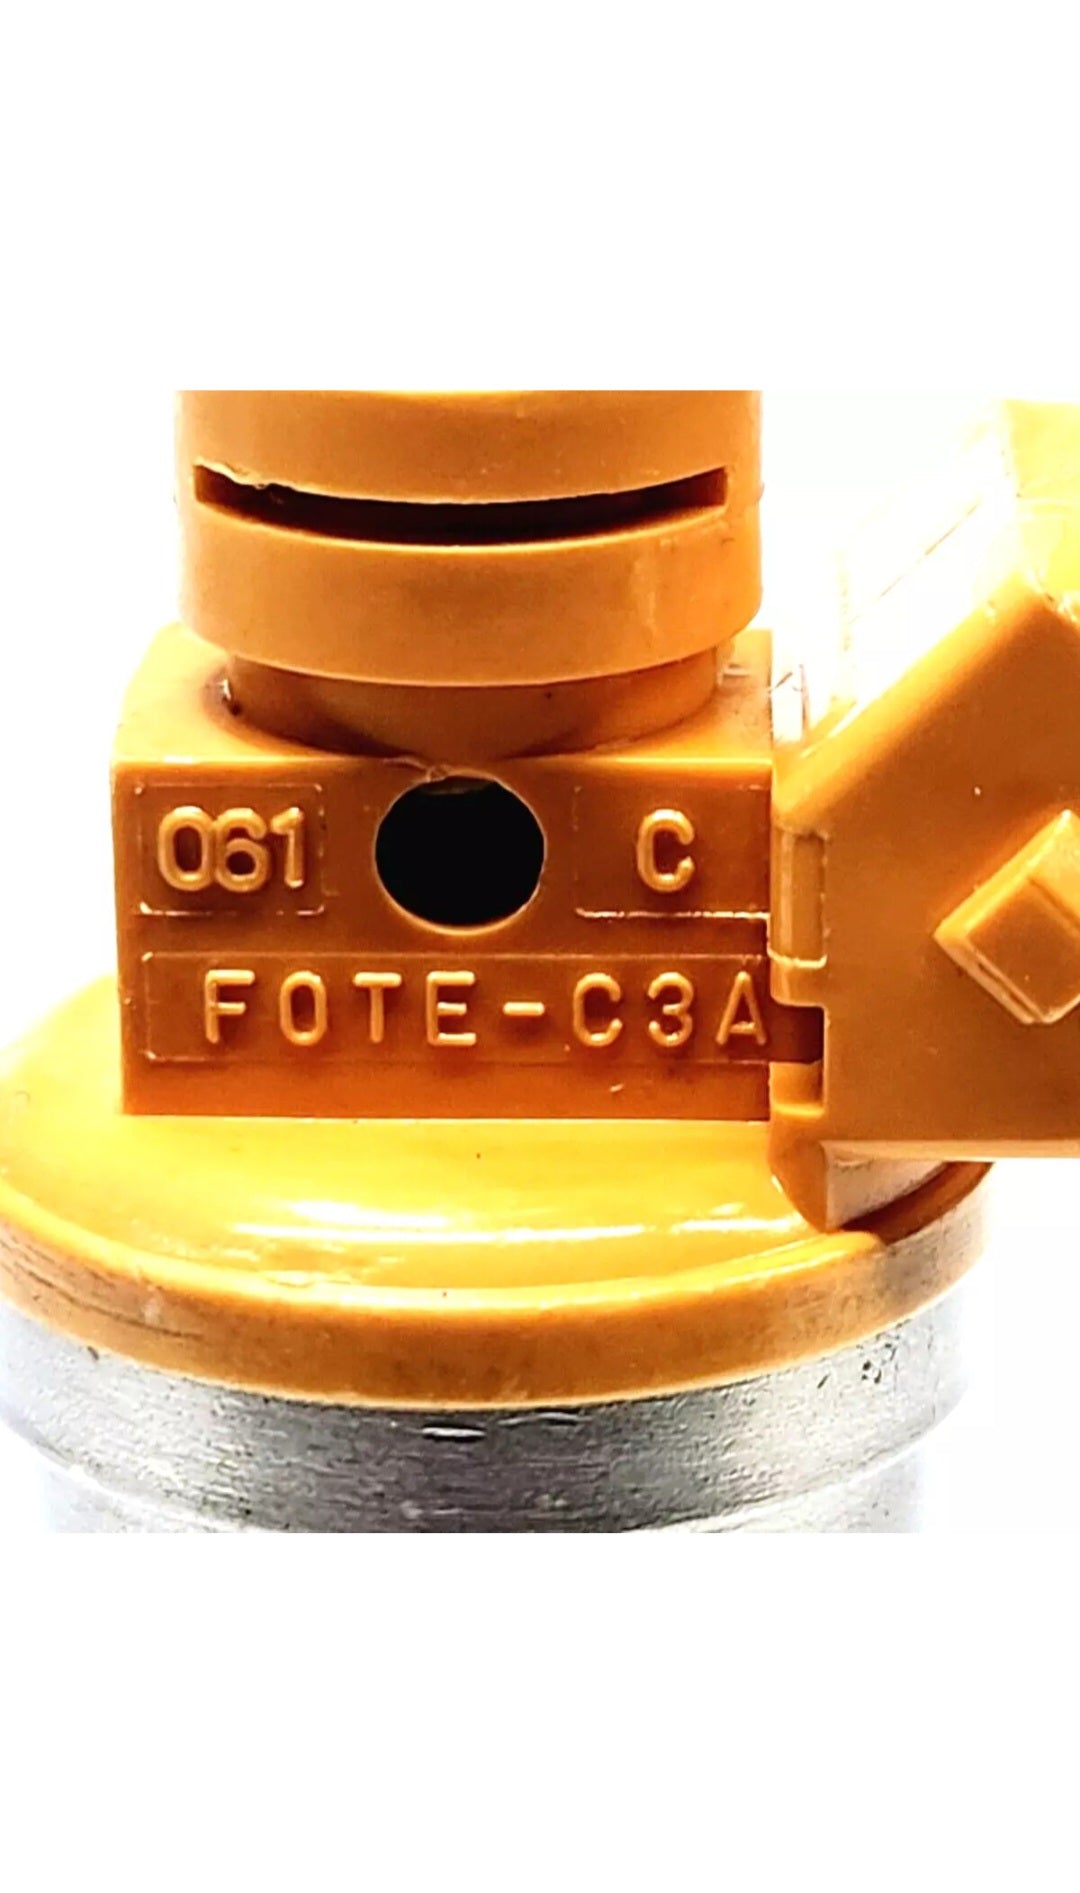 8 Genuine Ford F2TE-A3A / FOTE-C3A fuel injectors